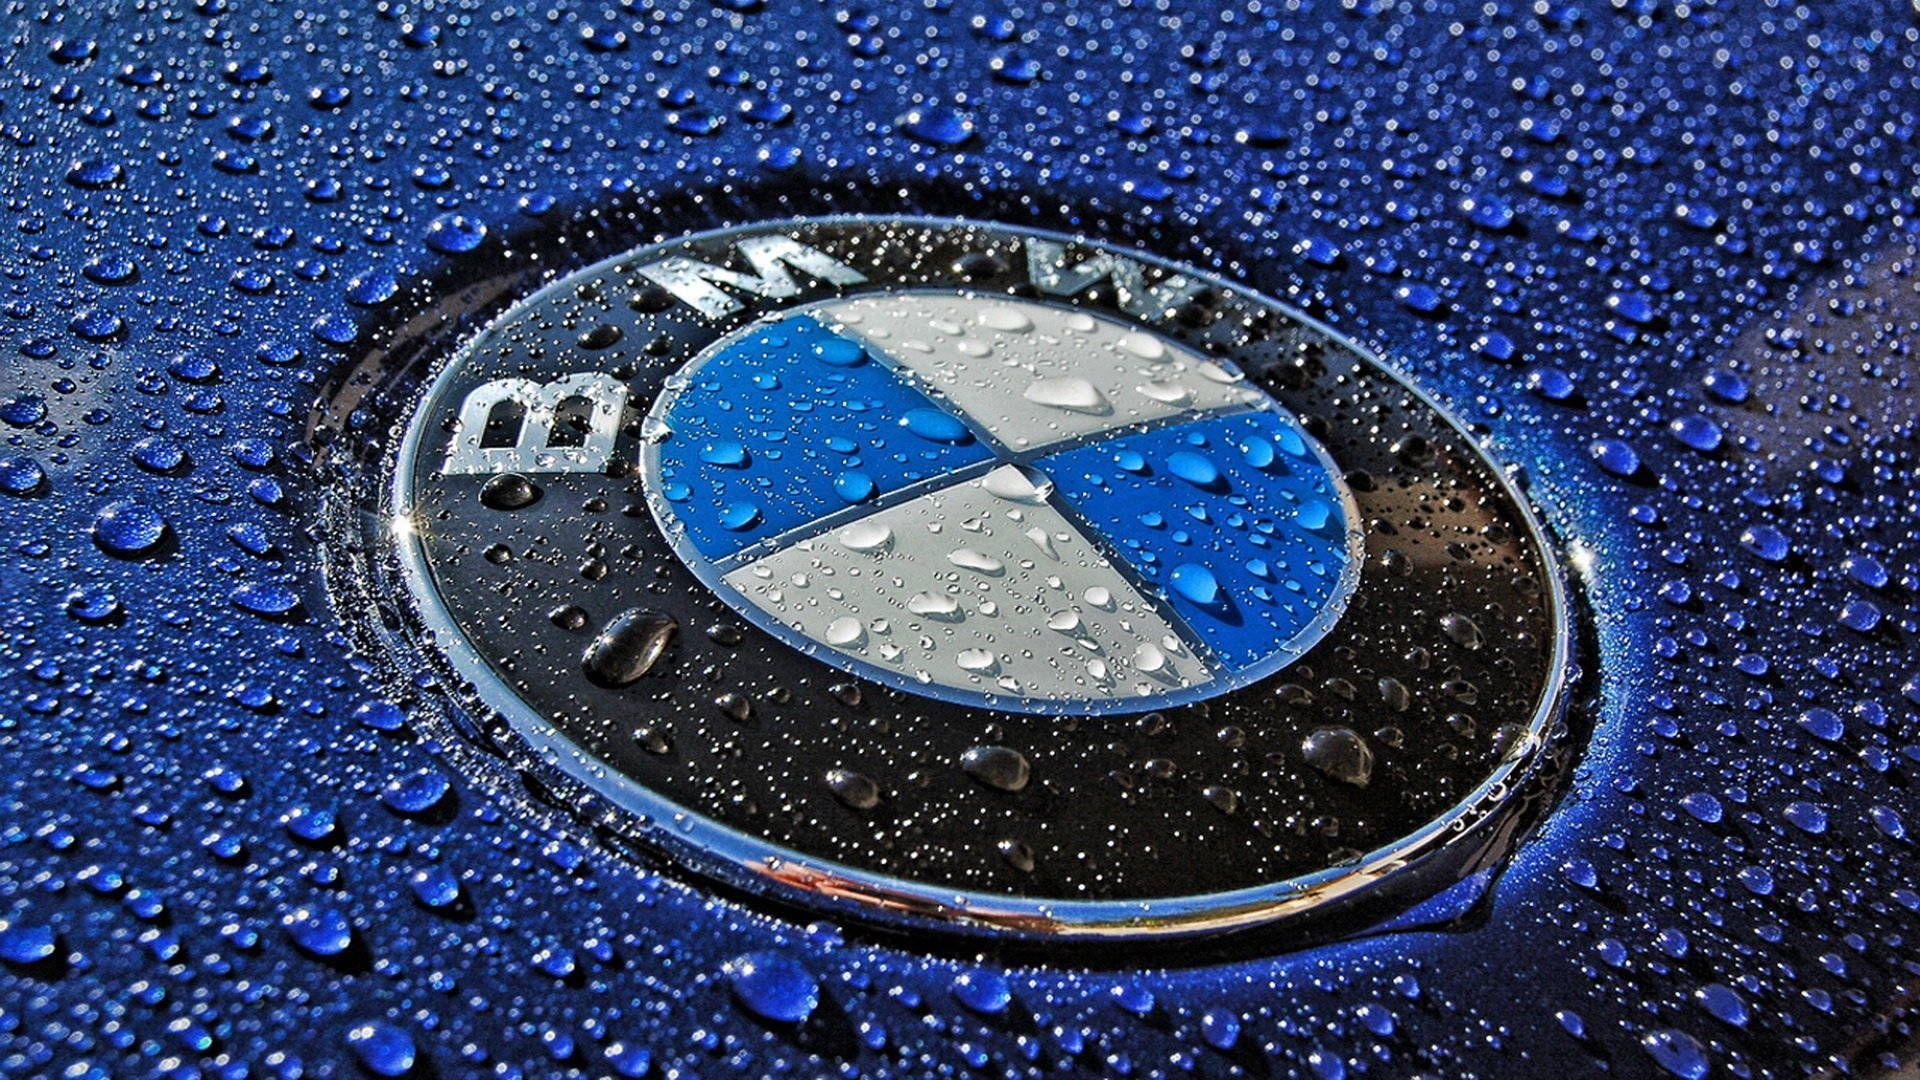 BMW Logo Wallpapers - Top Free BMW Logo Backgrounds - WallpaperAccess